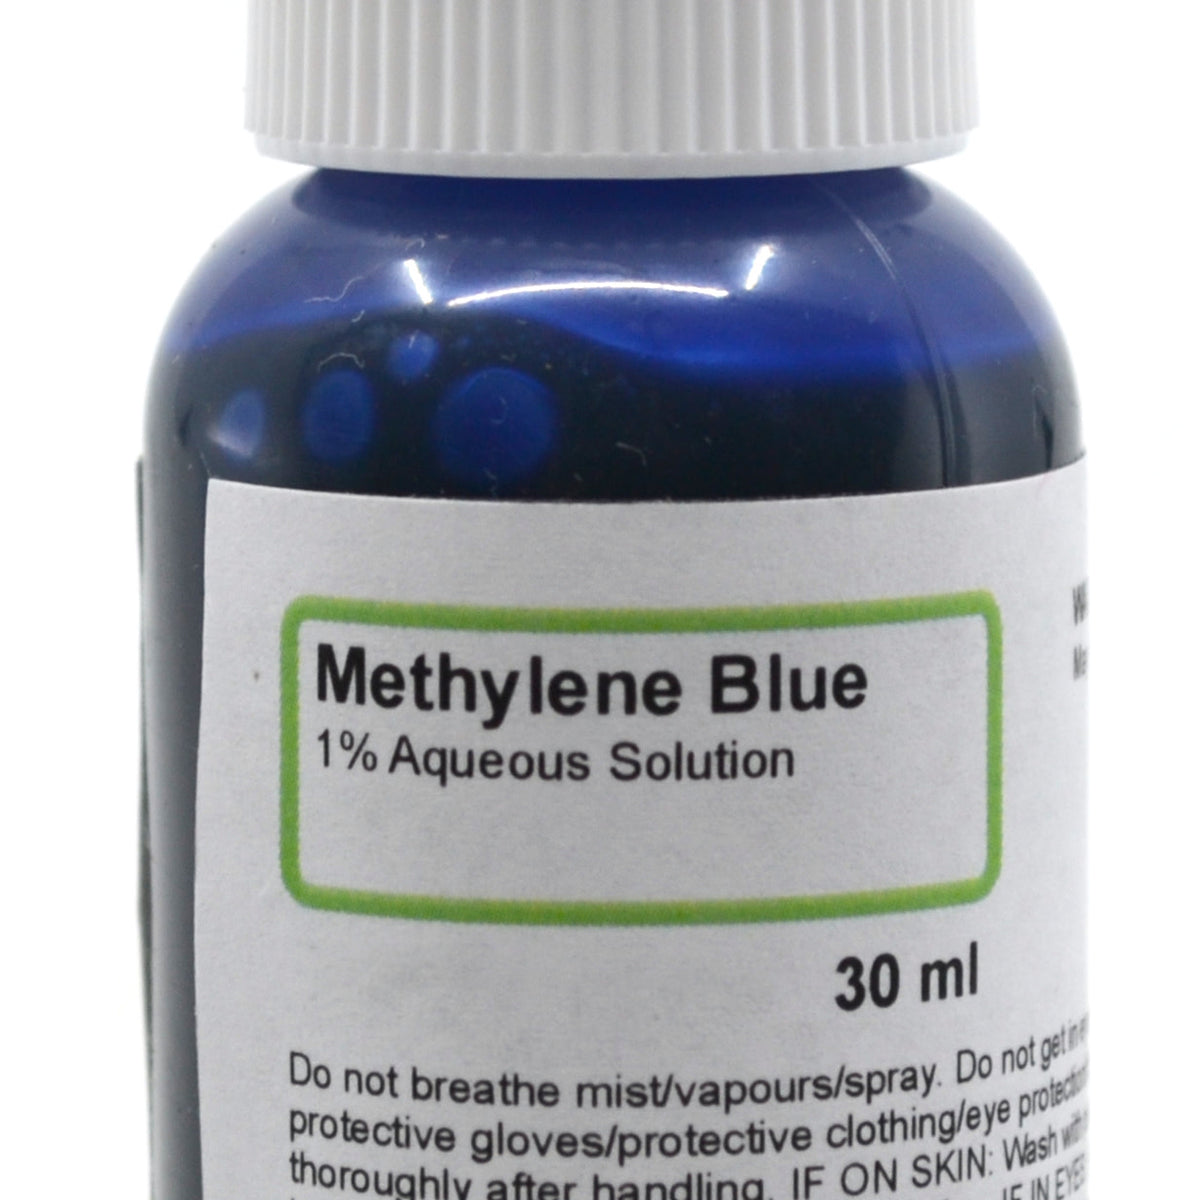 Vista-Blue™ Methylene Blue Dye